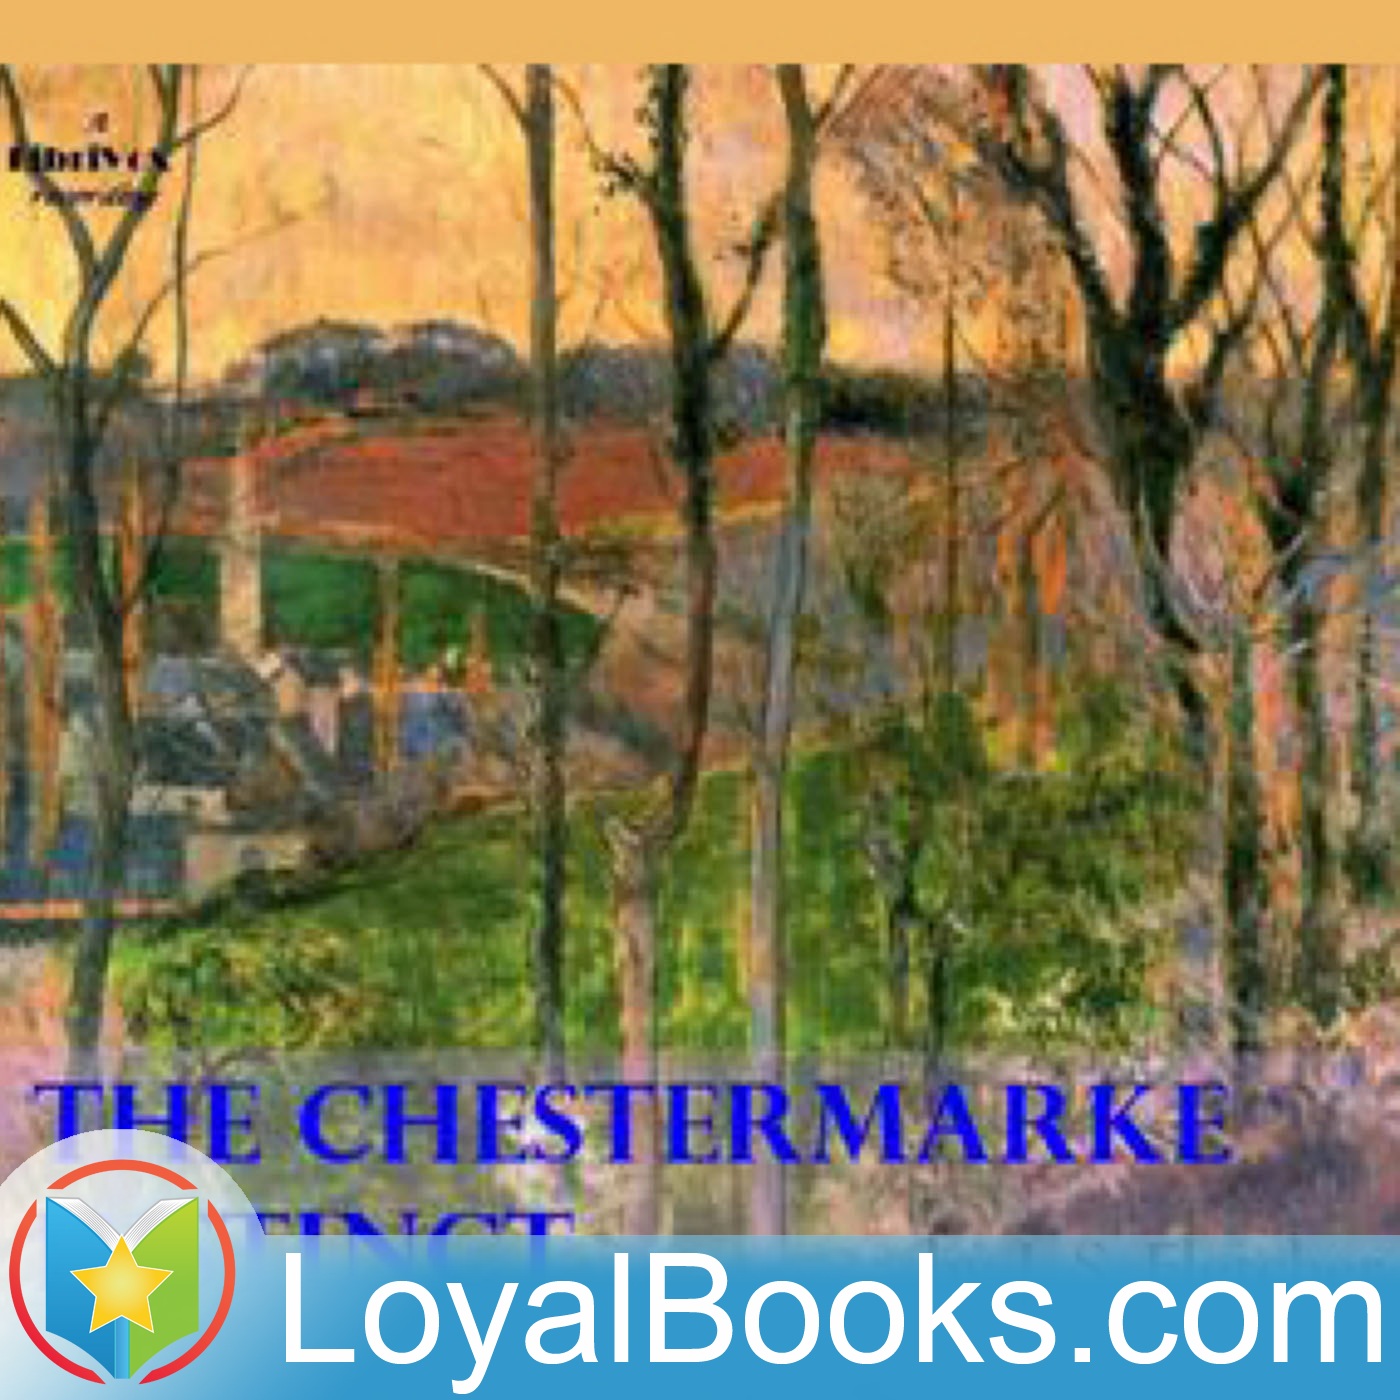 The Chestermarke Instinct by Joseph Smith Fletcher